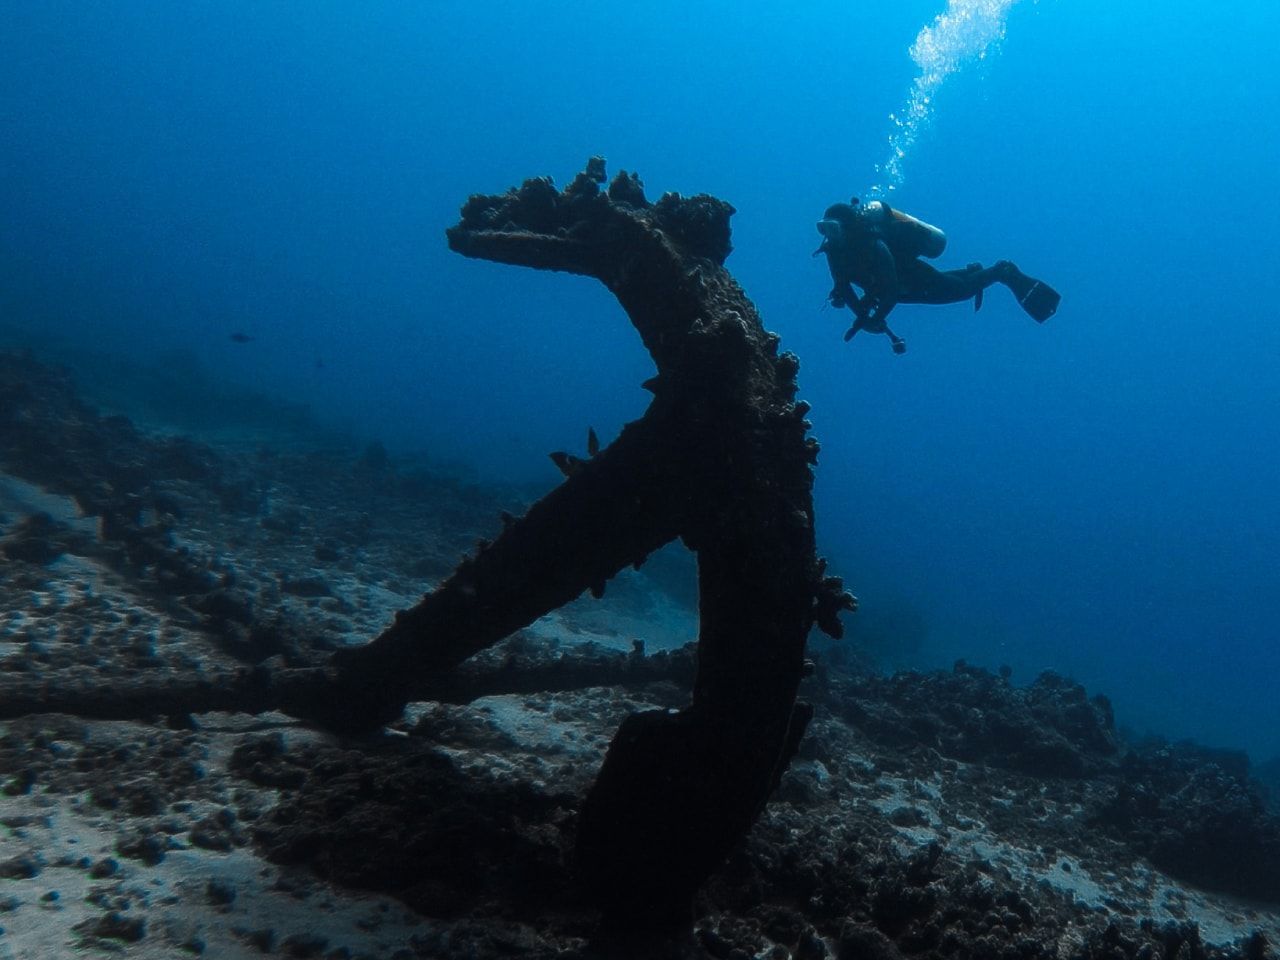 a scuba diver is swimming near an anchor in the ocean